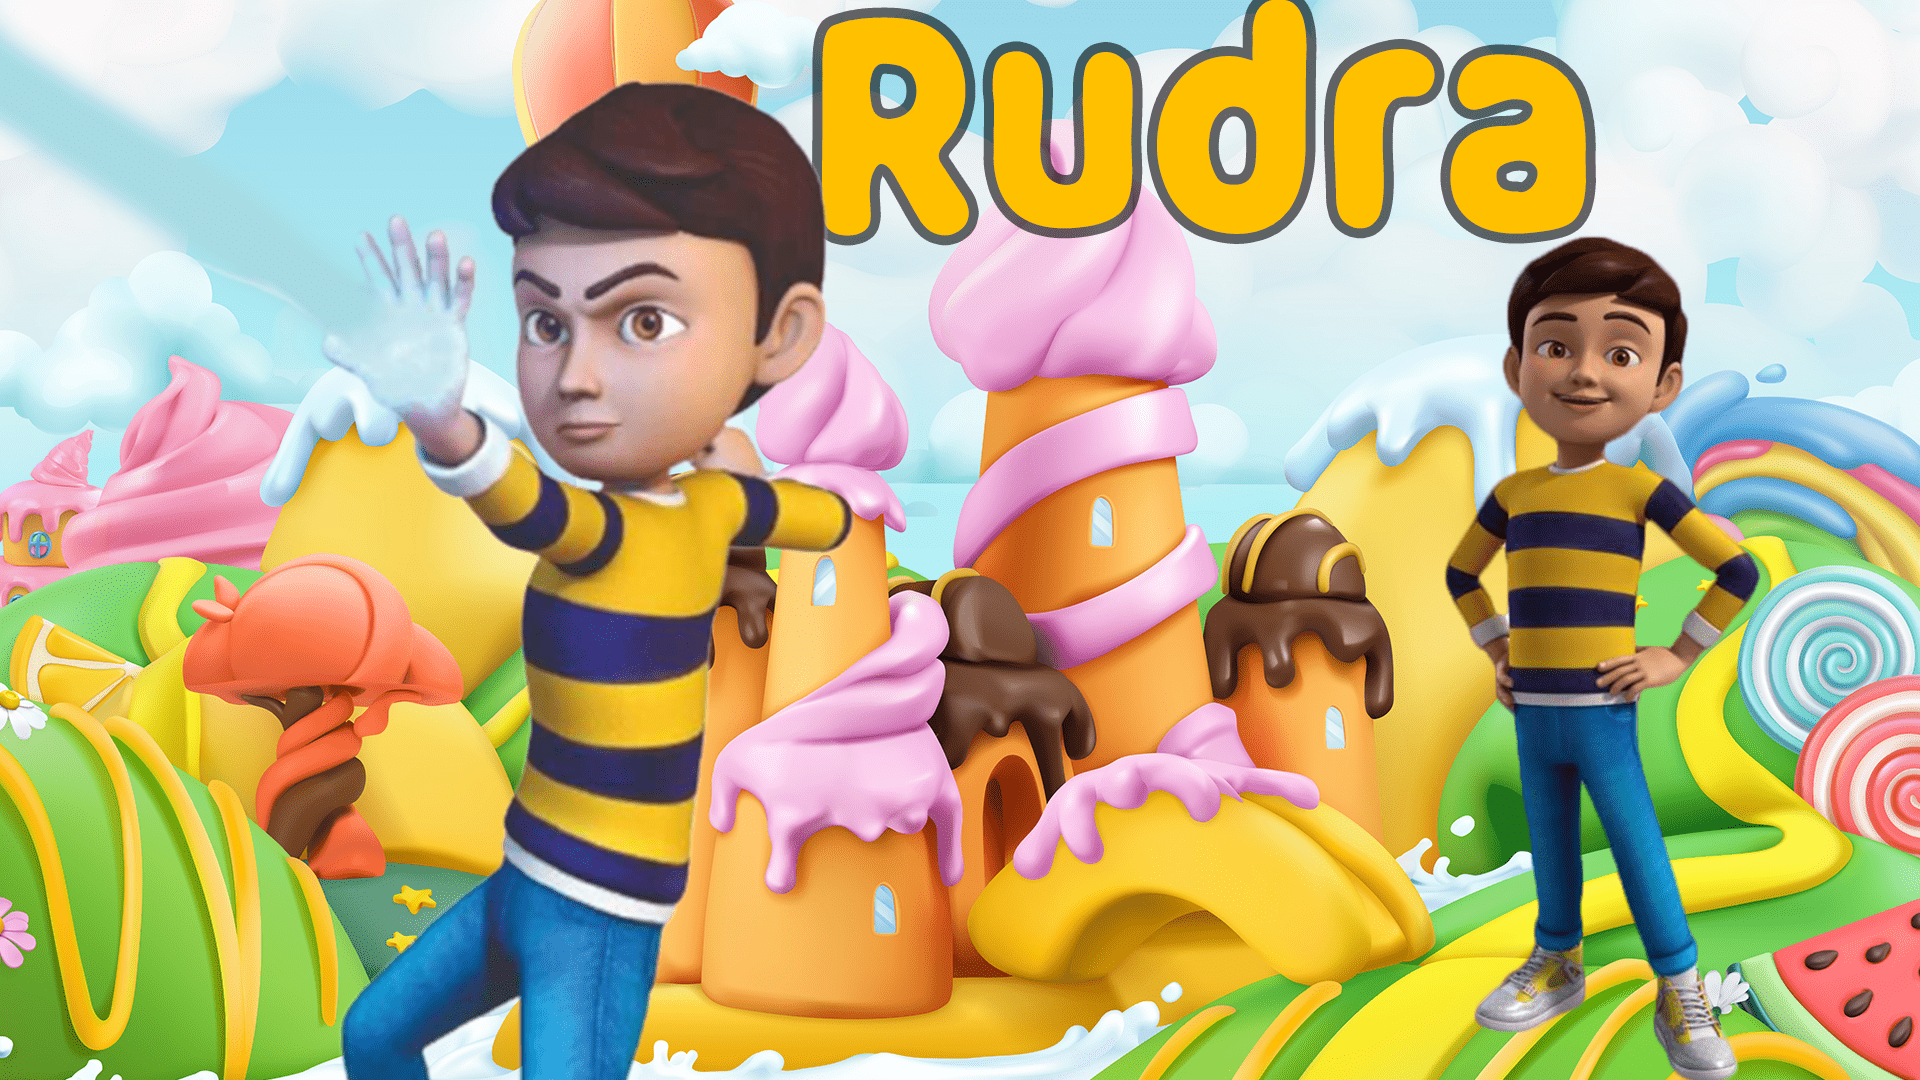 Rudra Cartoon Wallpapers Top Free Rudra Cartoon Backgrounds Wallpaperaccess 5122